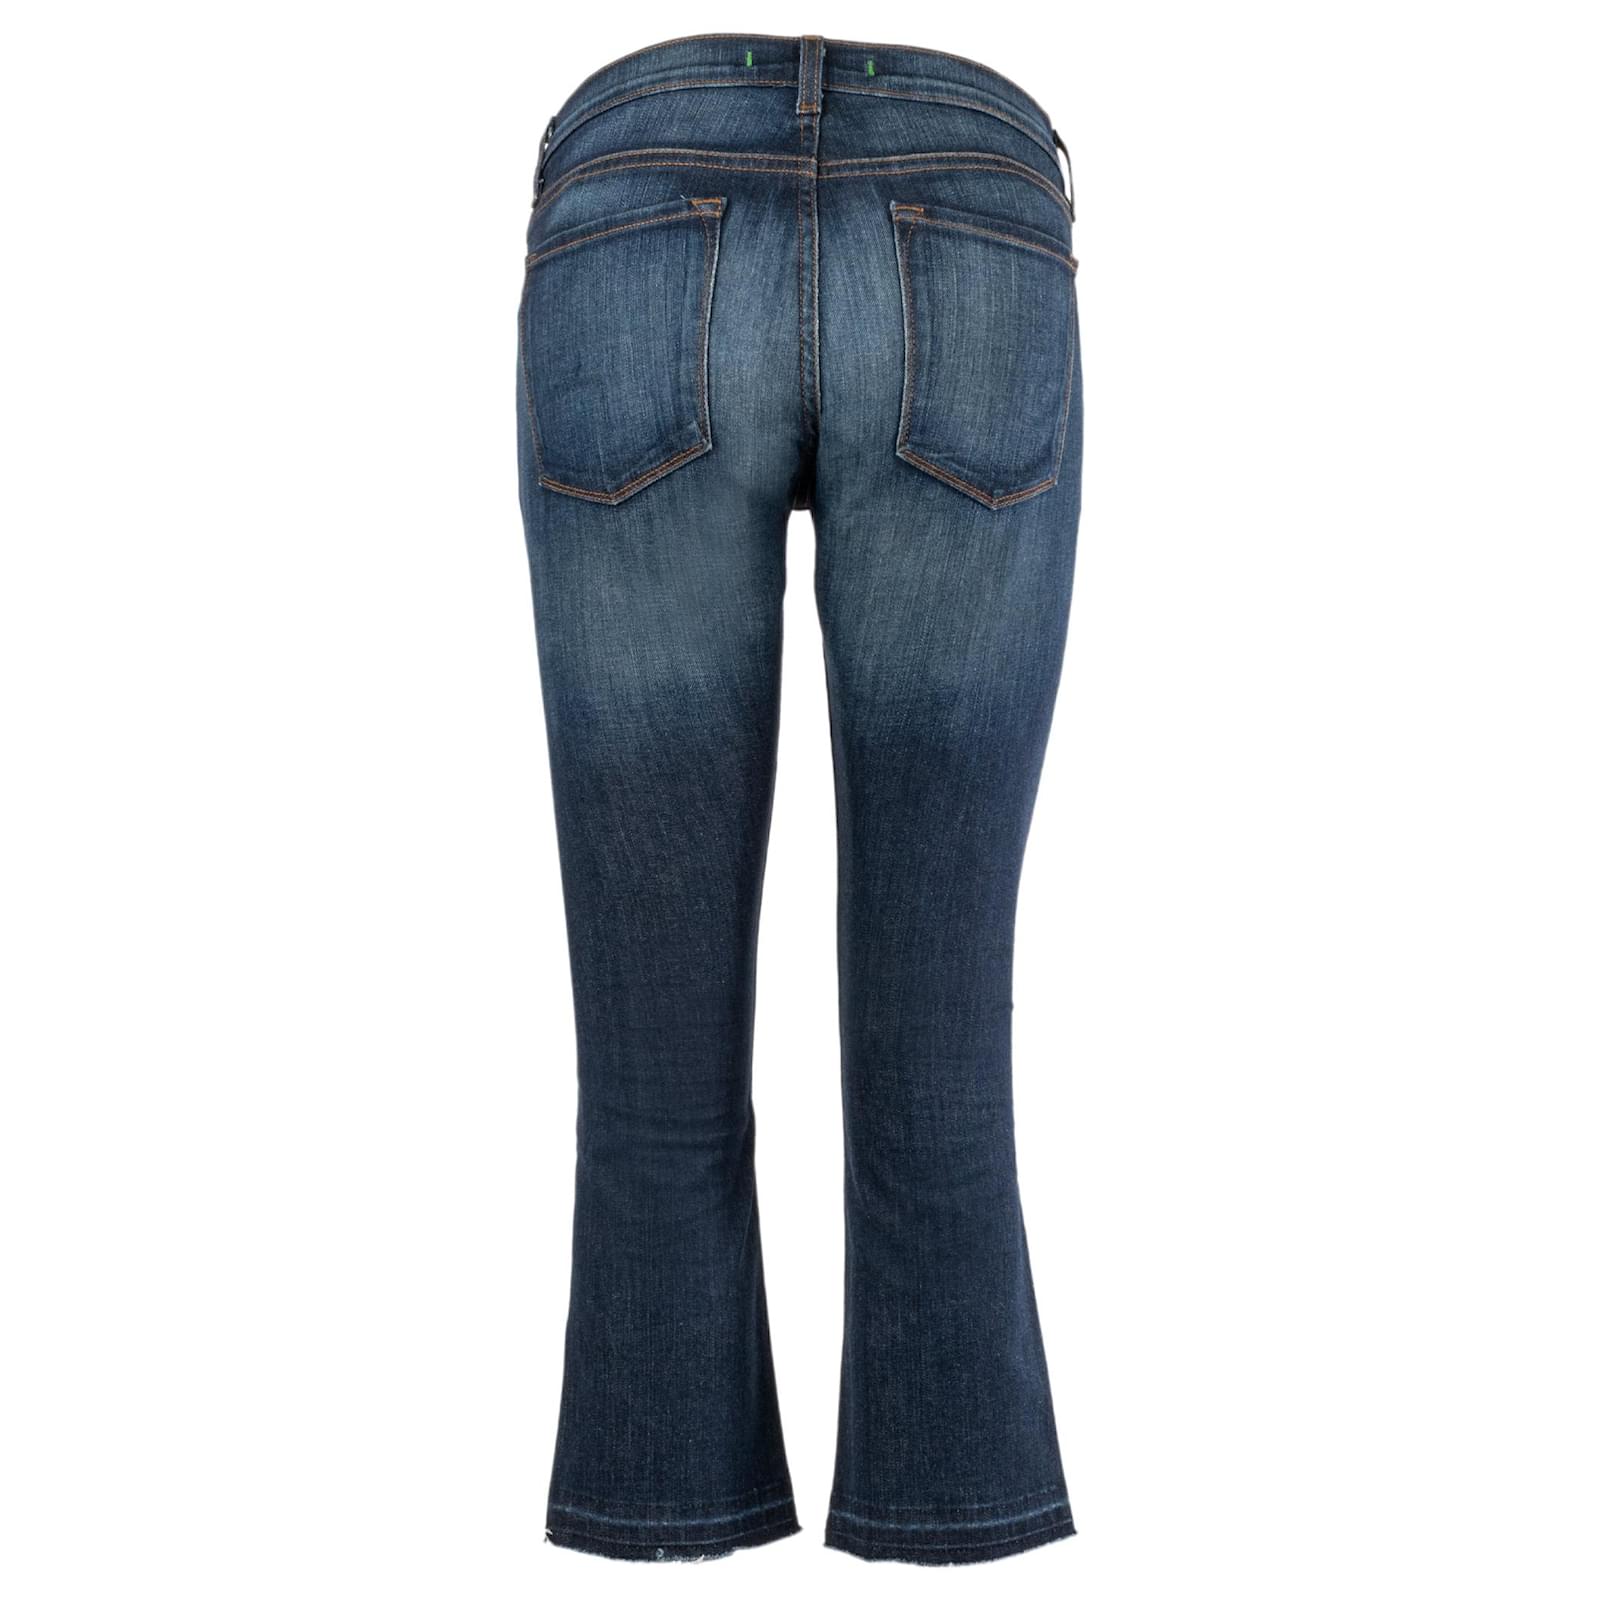 J Brand Kane Jeans - Denimblog's Review of J Brand Jeans